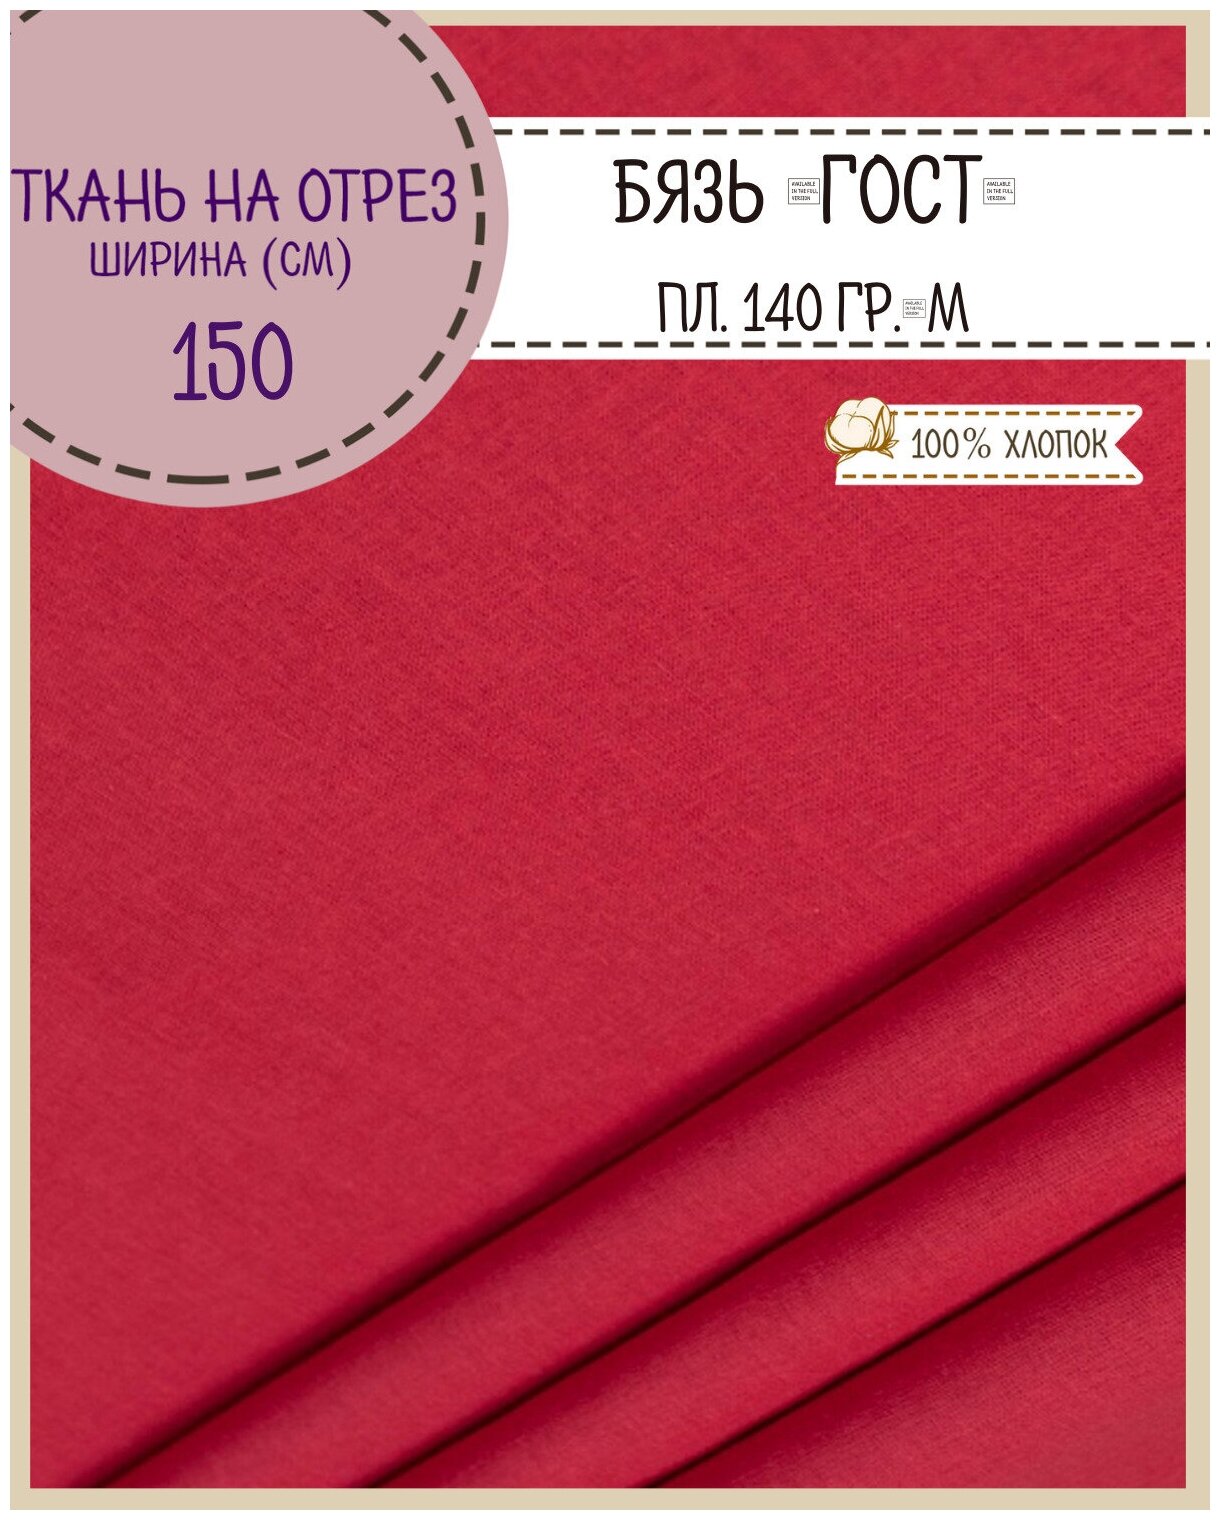 Ткань Бязь ГОСТ однотонная, цв. красный, 100% хлопок, пл. 140 г/м2, ш-150 см, на отрез, цена за пог. метр